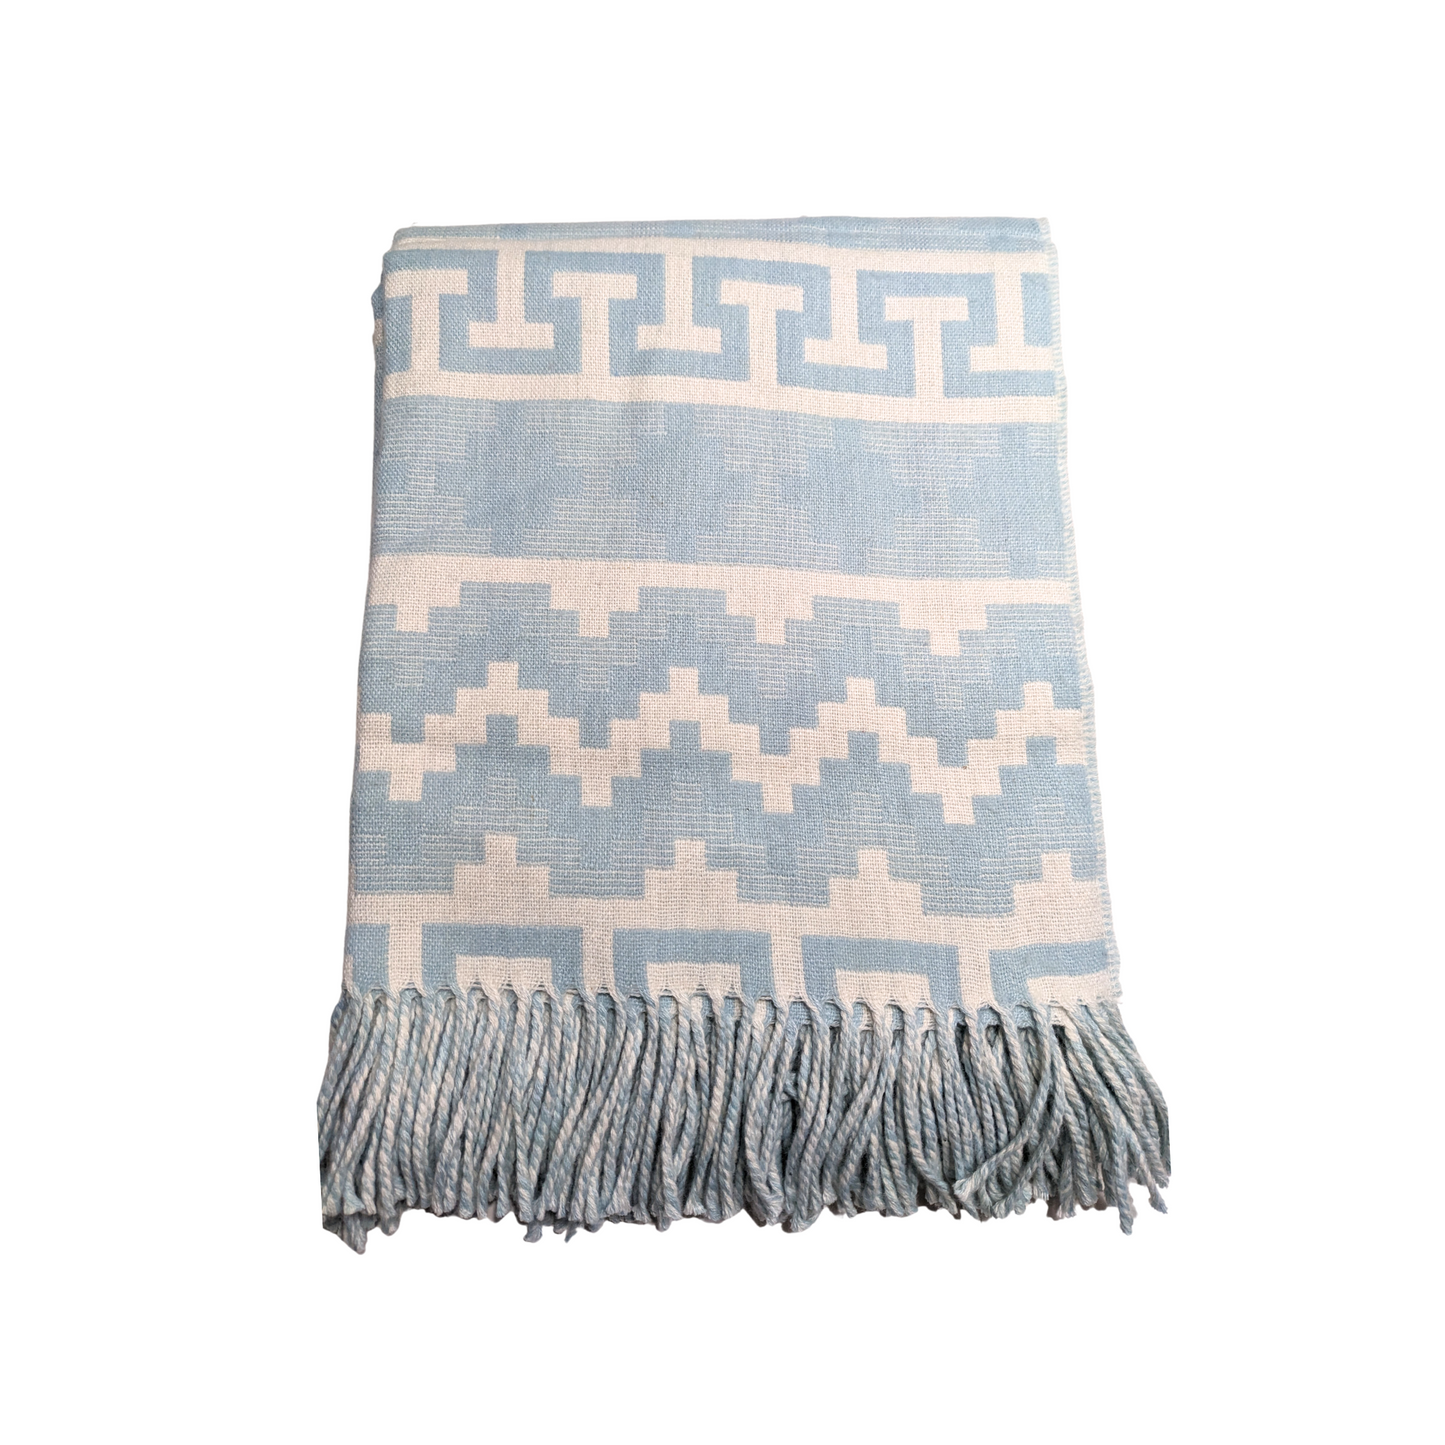 Nazca Alpaca Blanket